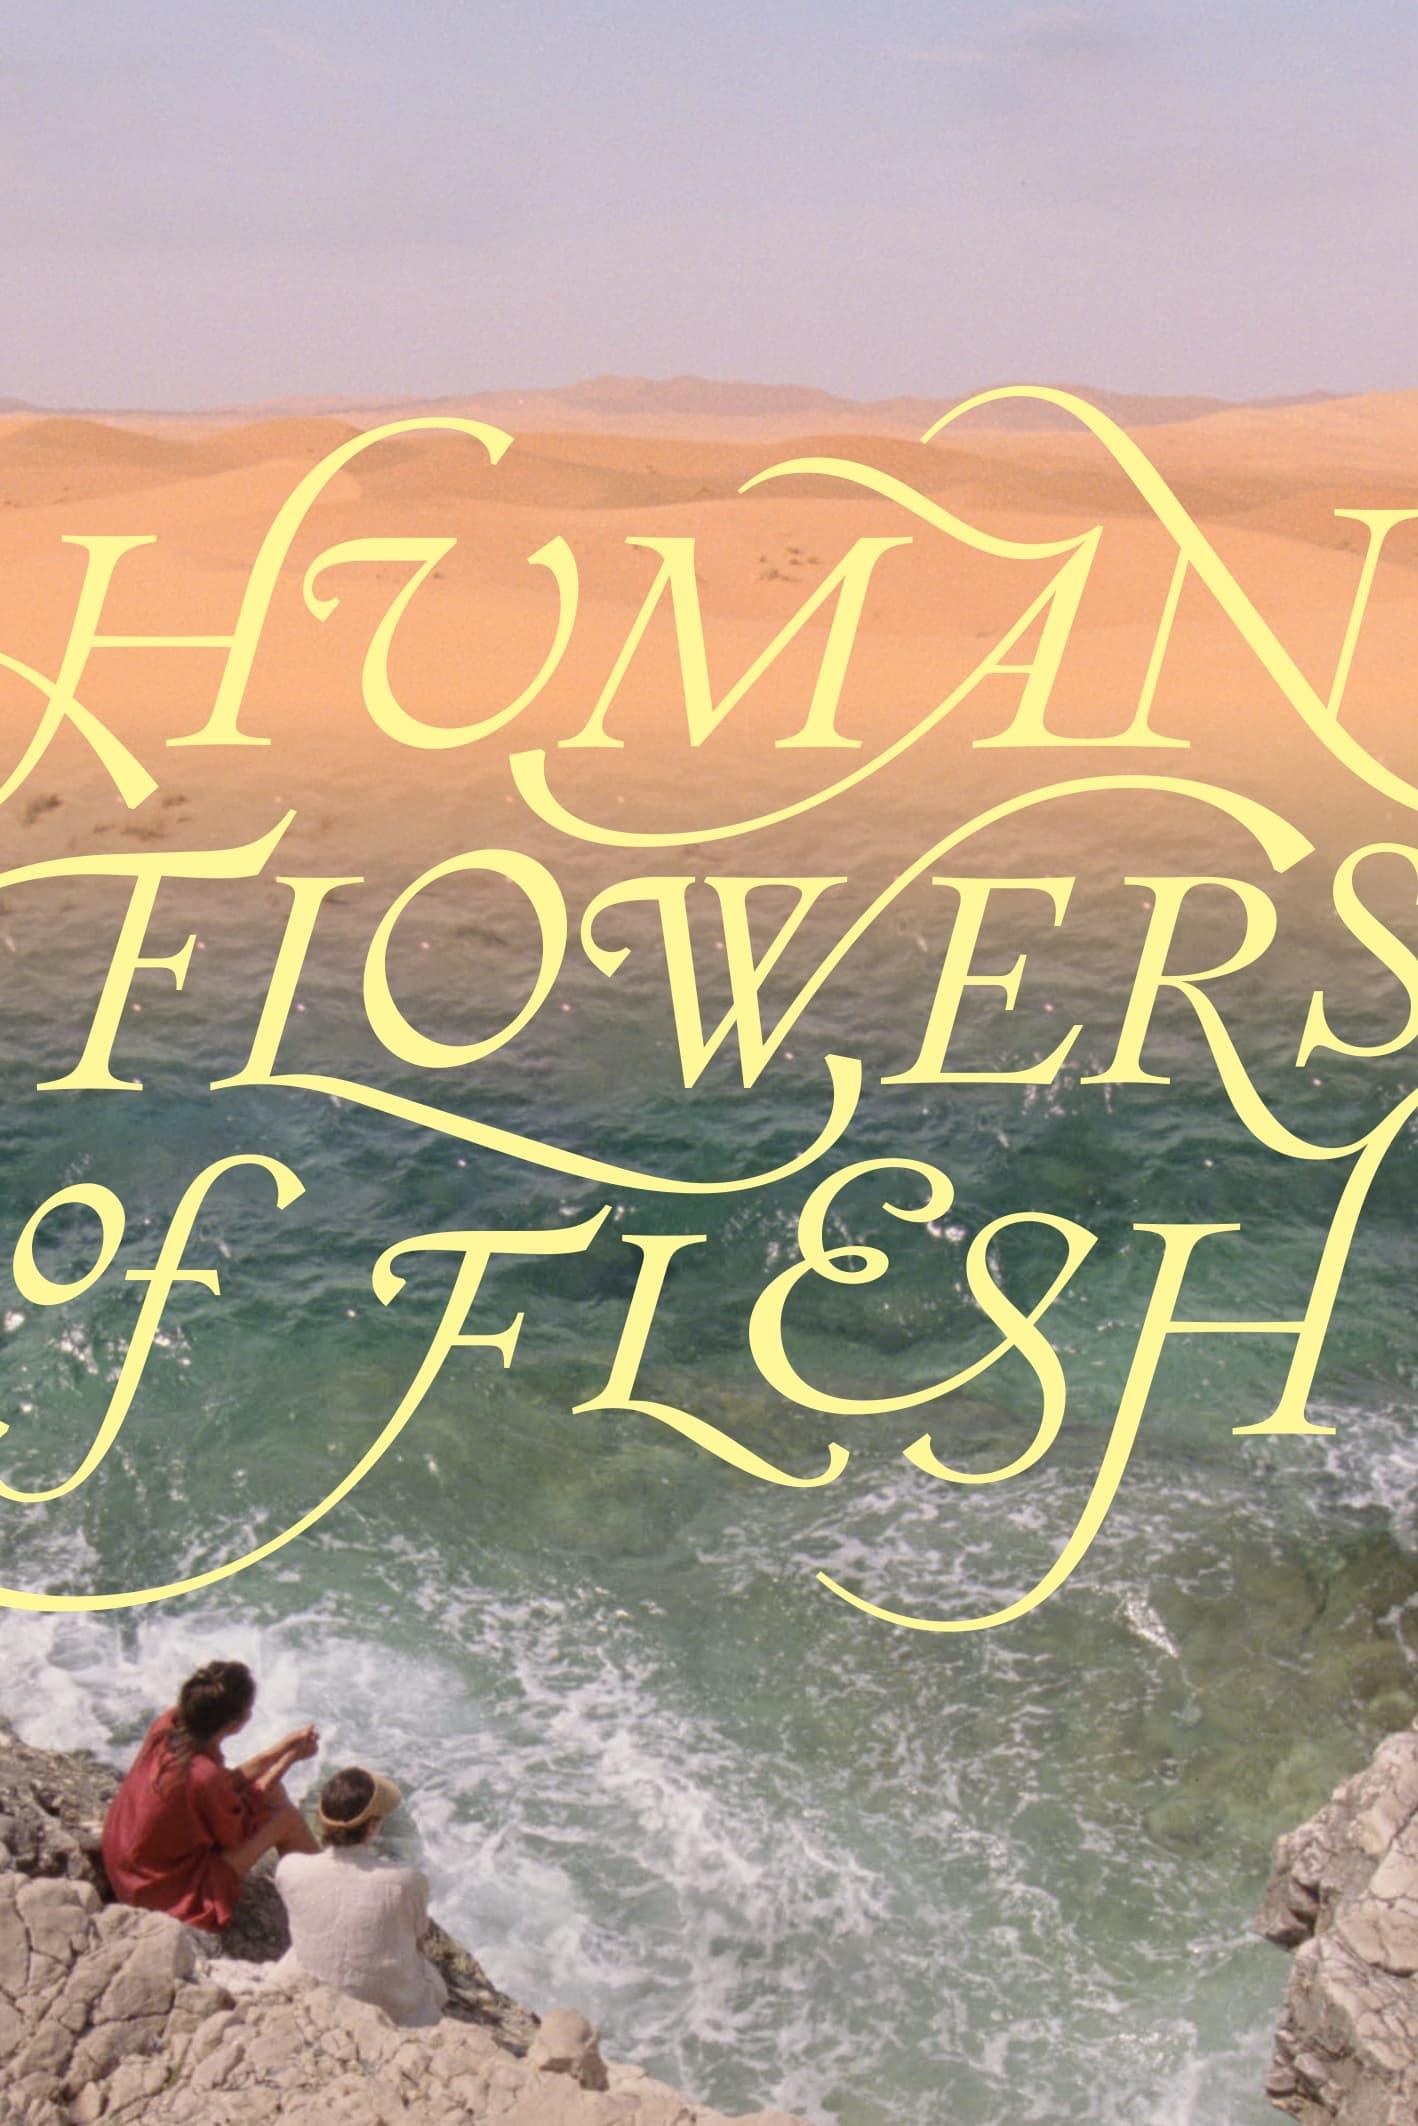 Human Flowers of Flesh poster